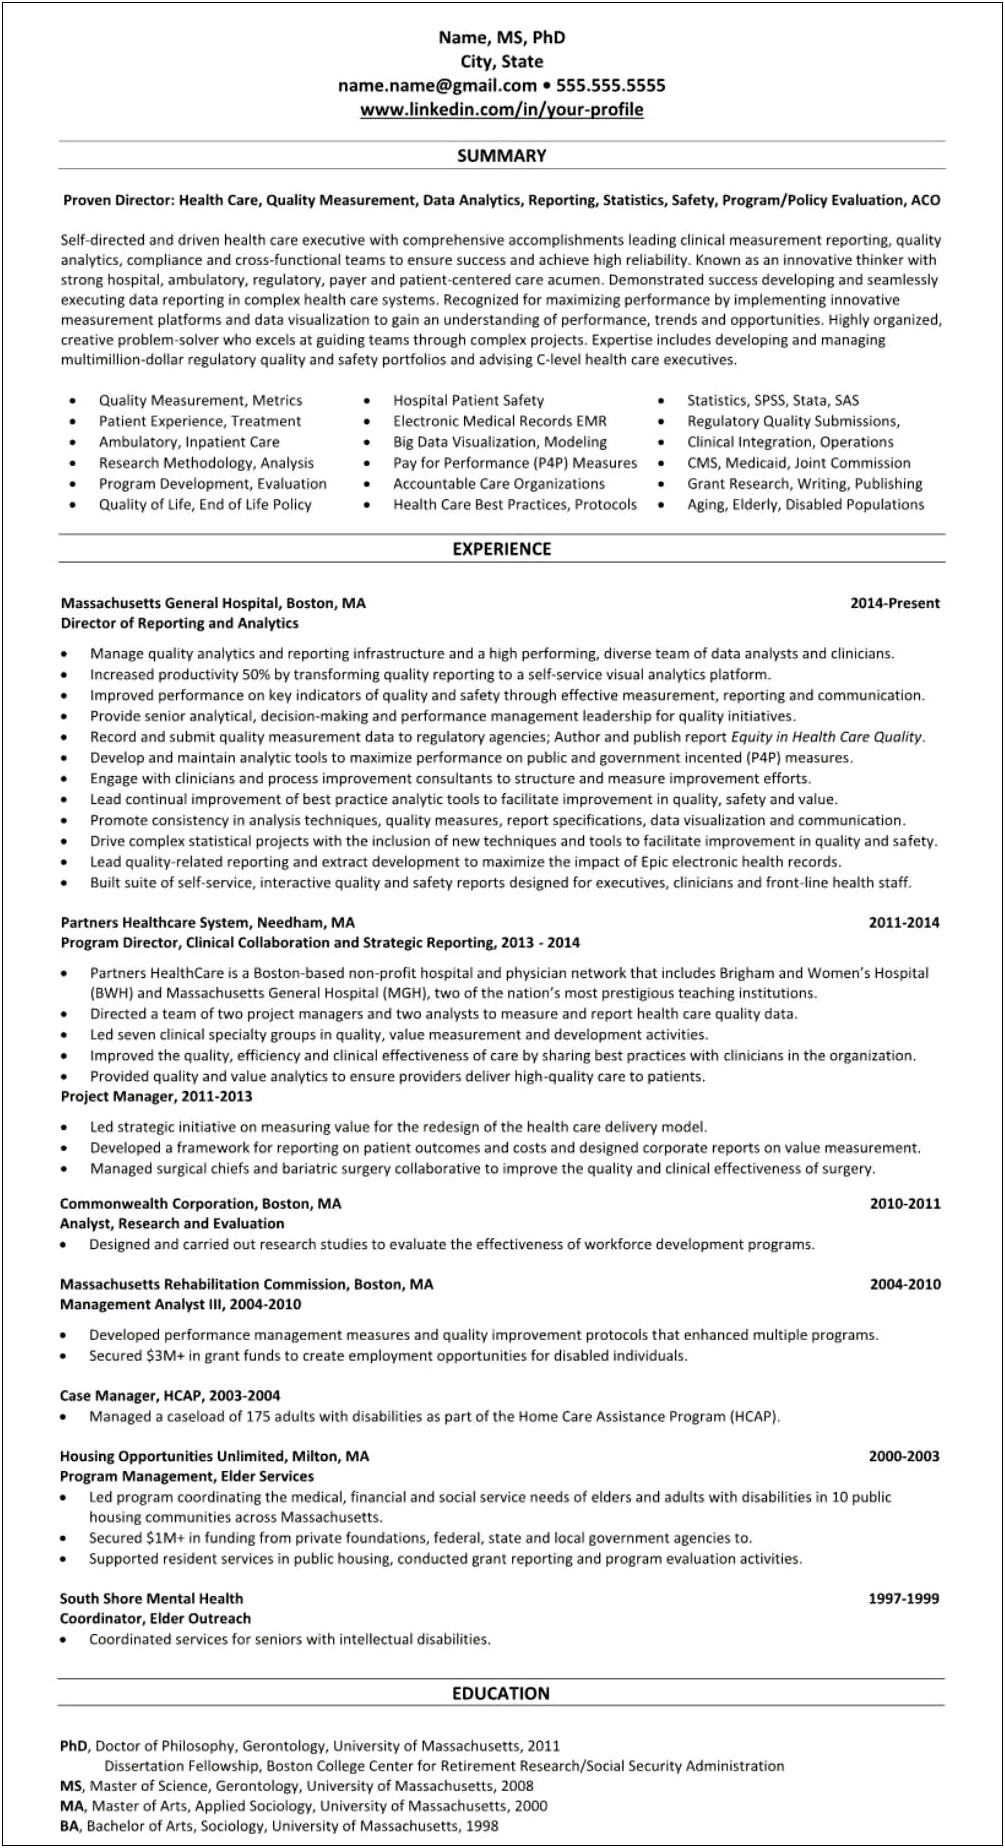 Health Care Data Profile Summary Resume